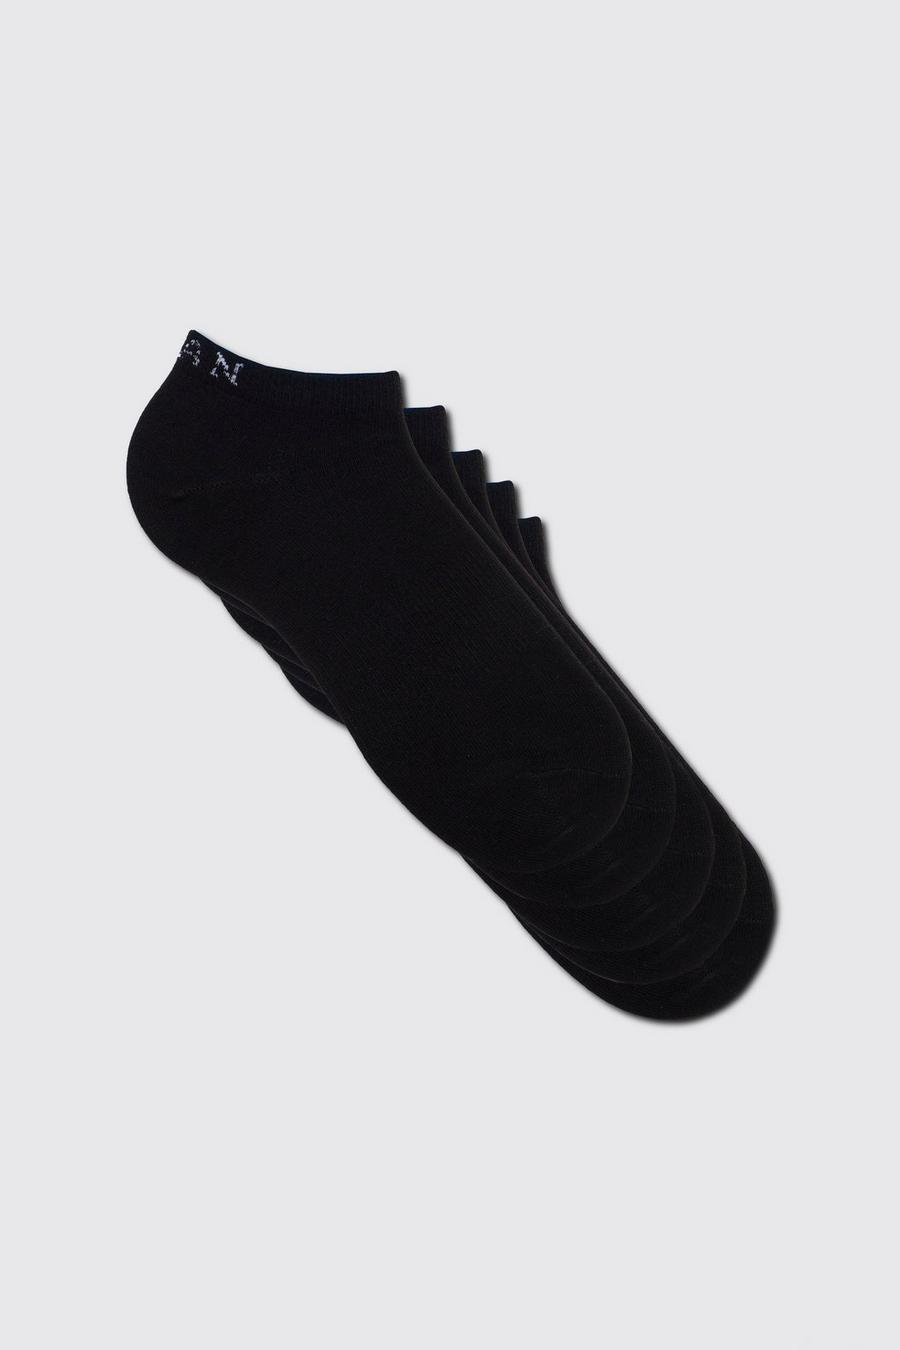 Pack de 5 pares de calcetines MAN deportivos, Black negro